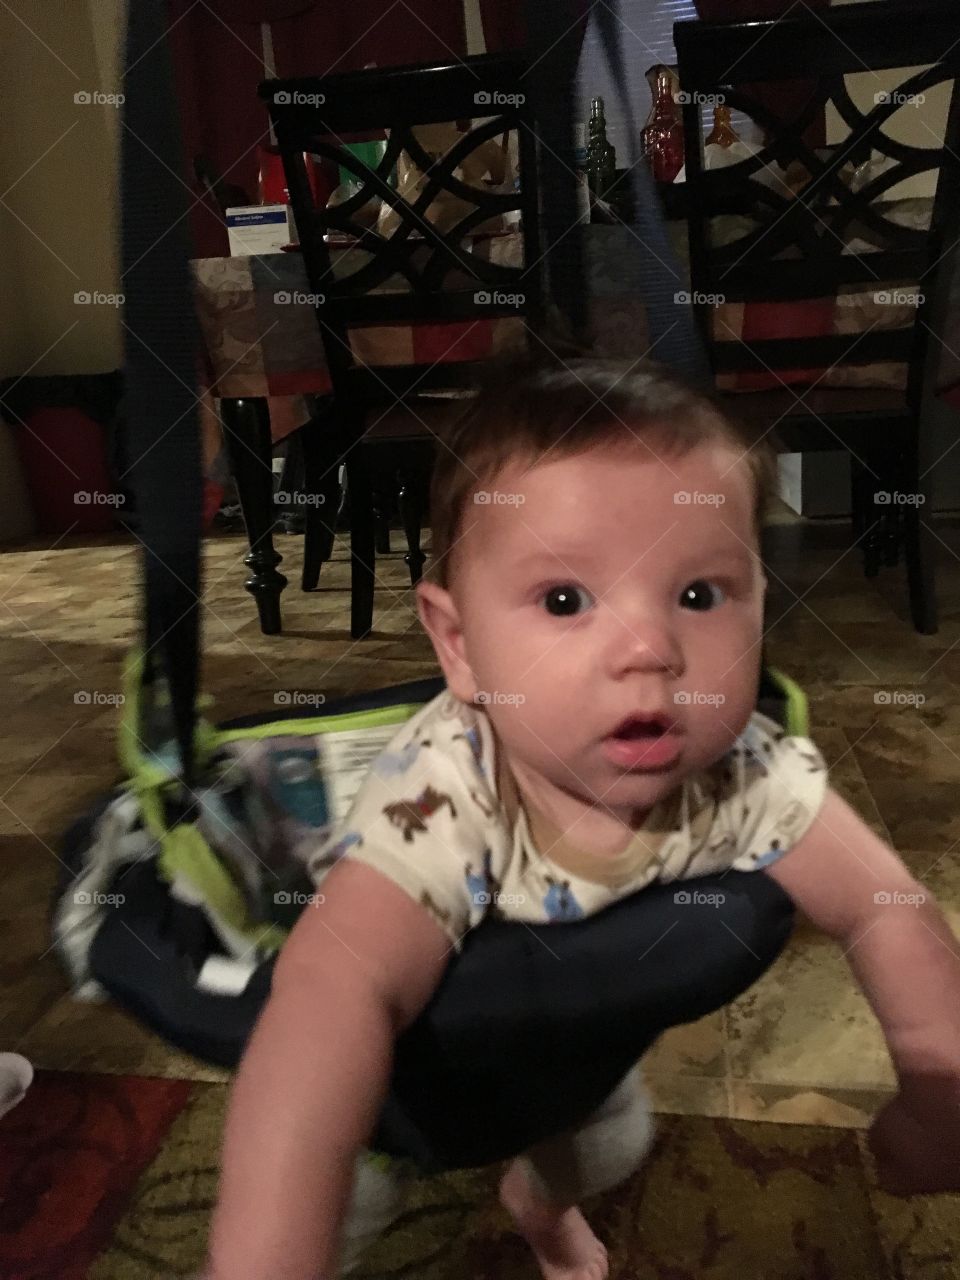 My grandson enjoying his bouncer 🙂